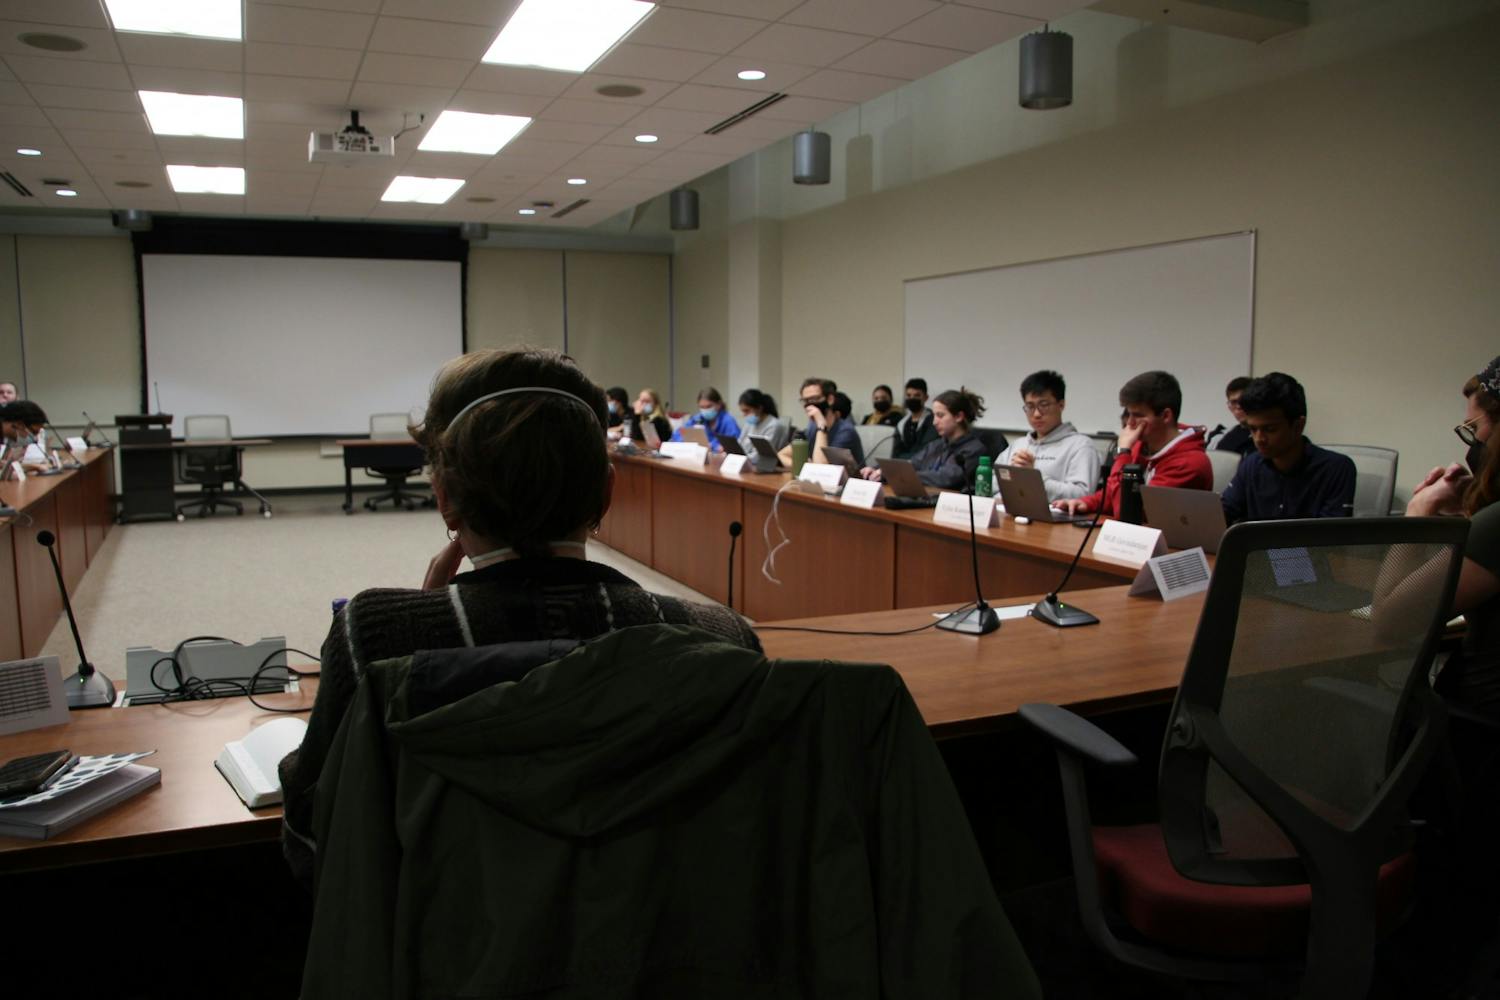 Drake White-Bergey ASM Associated Students of Madison Student Council Meeting SAC (1).JPG